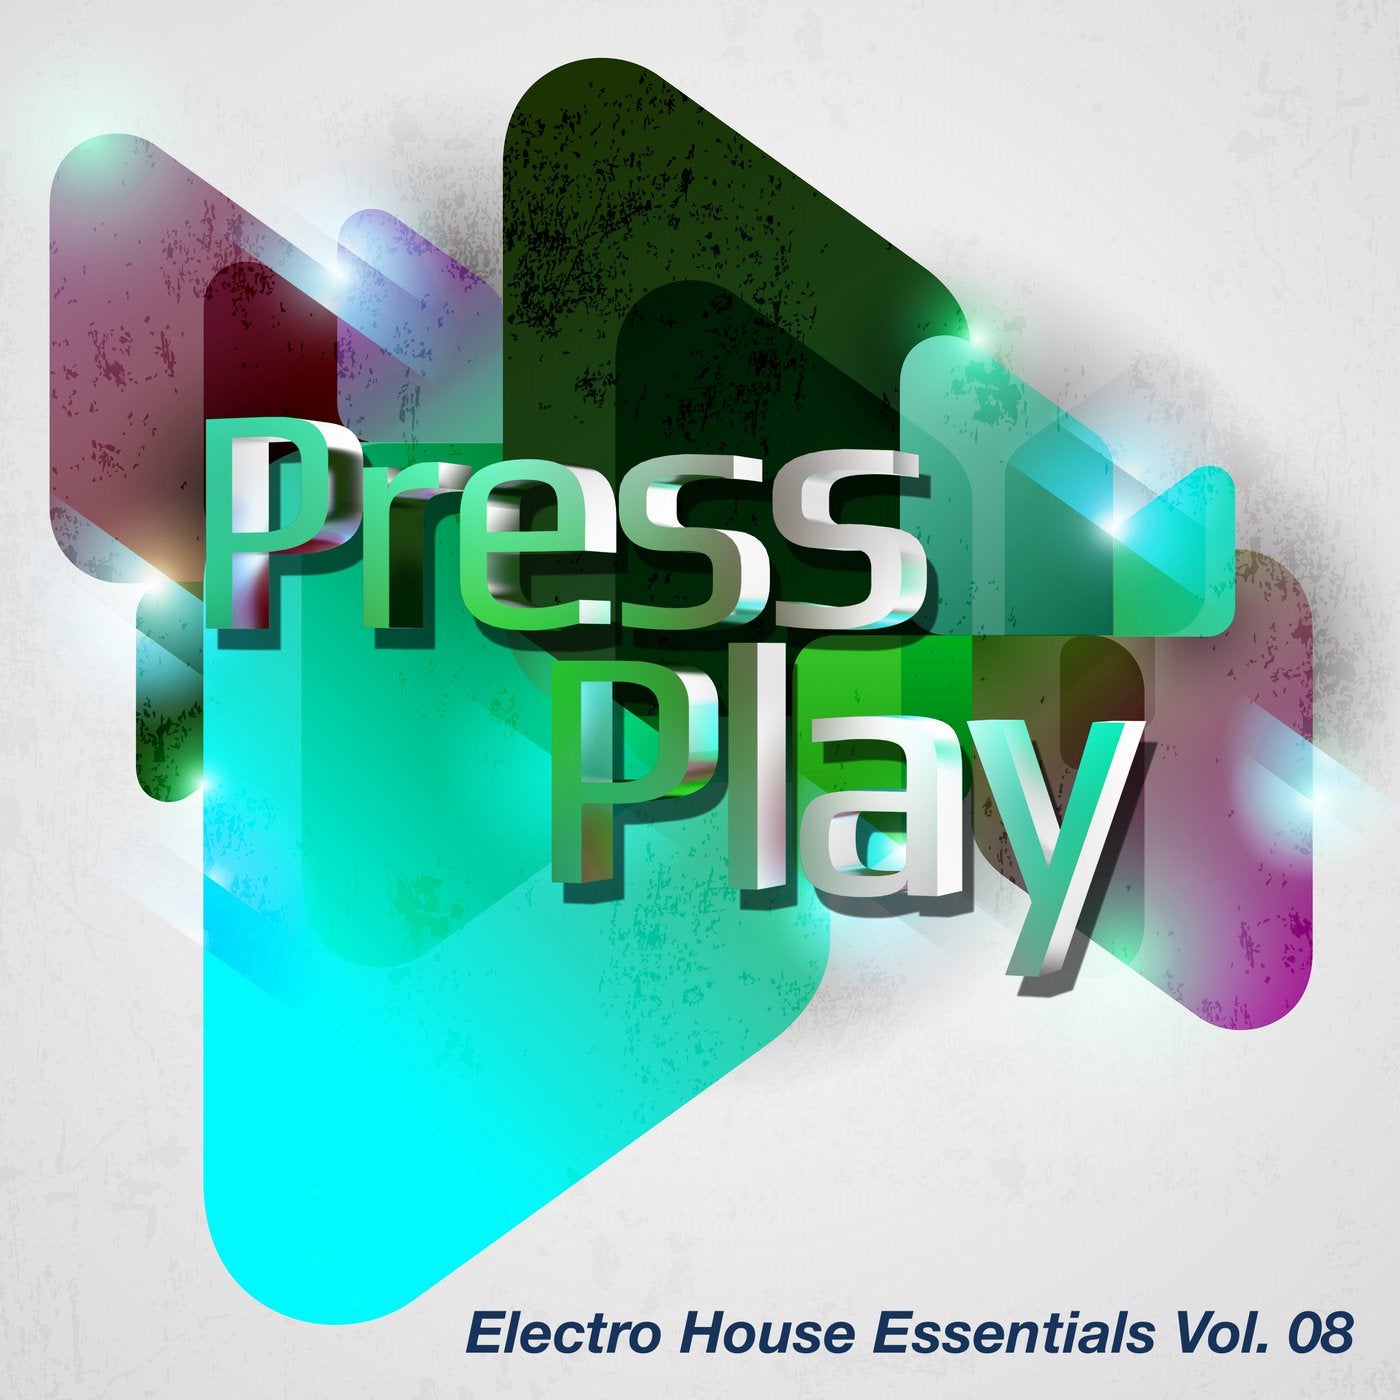 Electro House Essentials Vol. 08